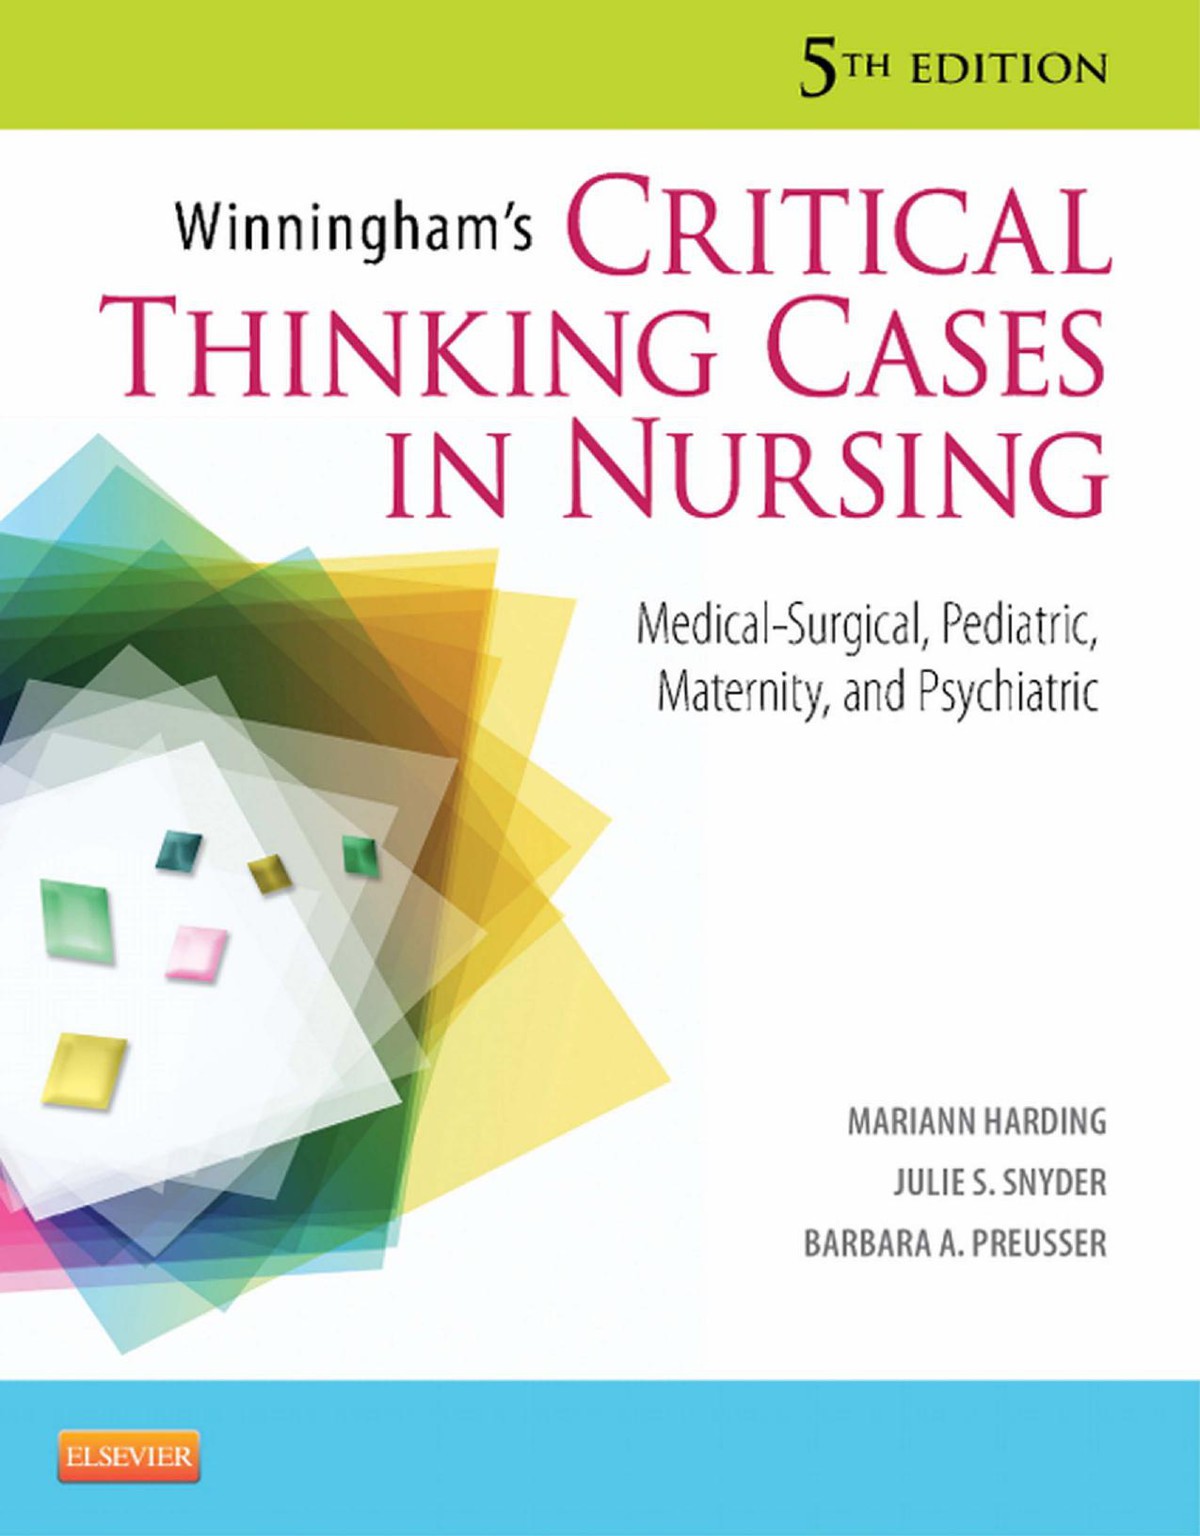 Winningham's Critical Thinking Cases in Nursing 5th Edition PDF Free